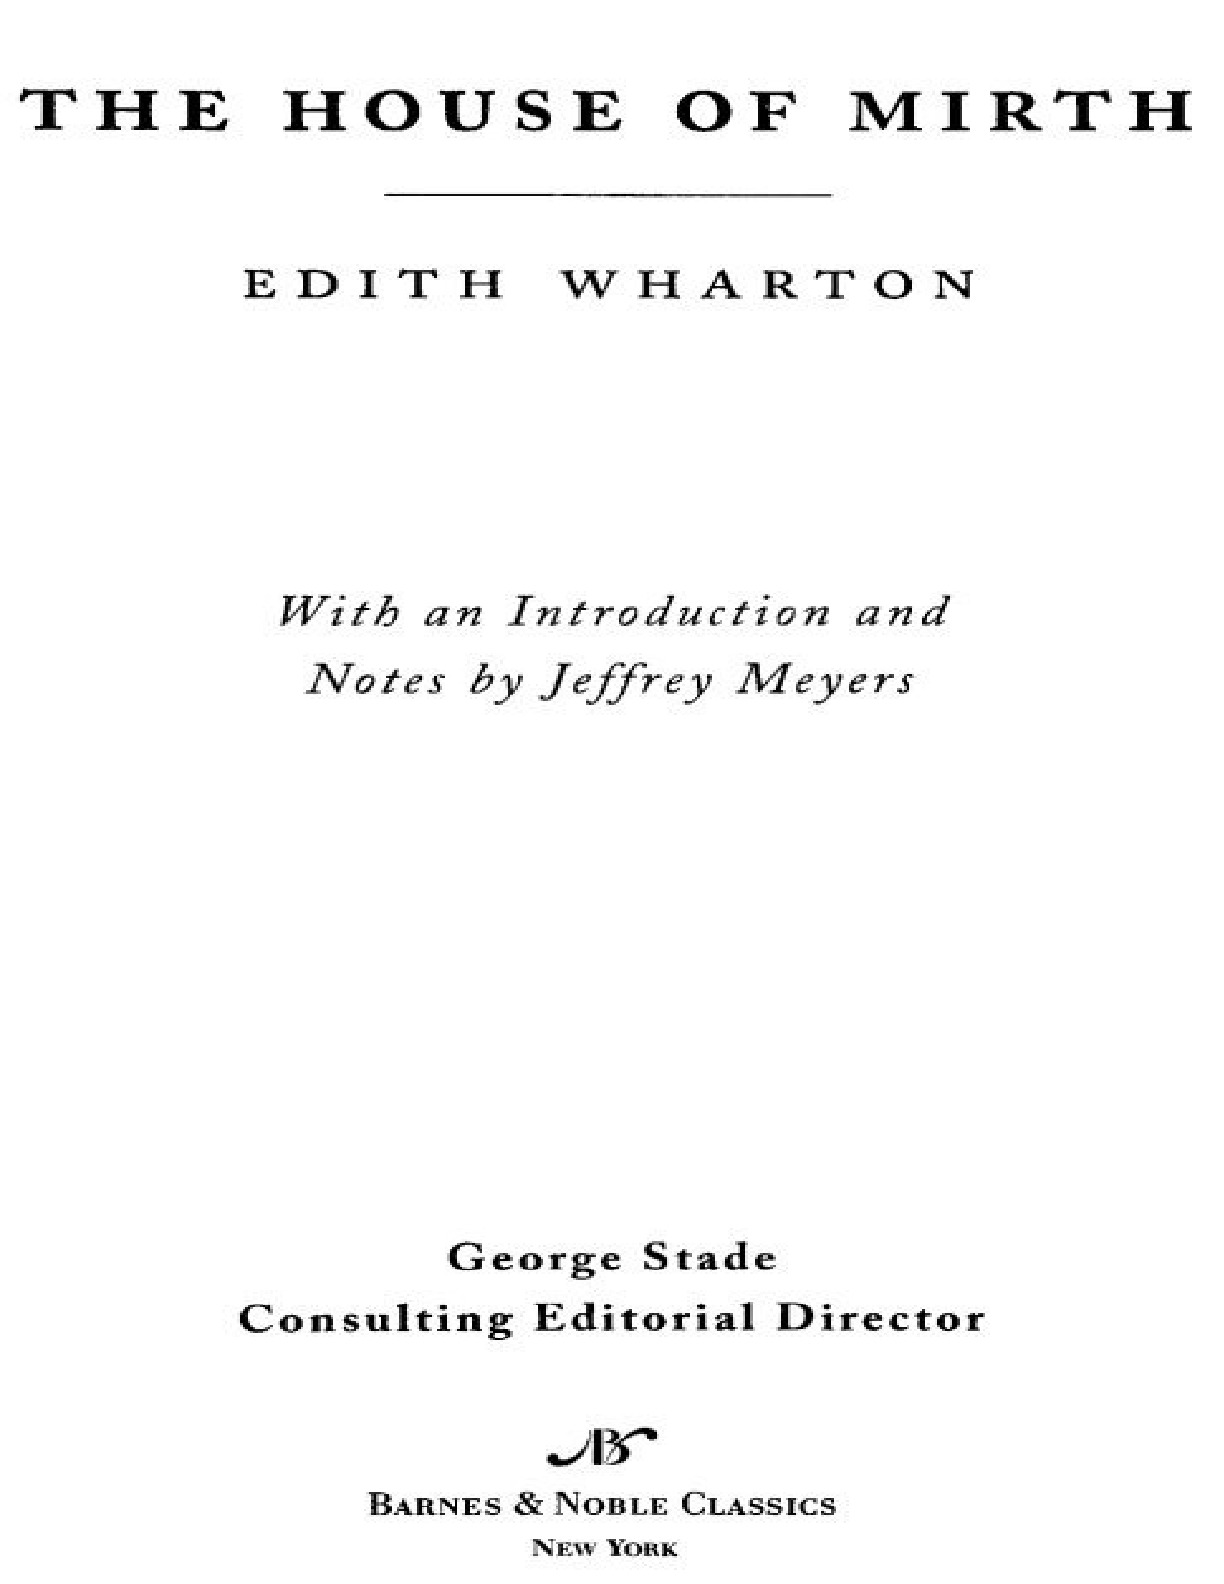 House of Mirth (Barnes & Noble Classics Series) – Edith Wharton